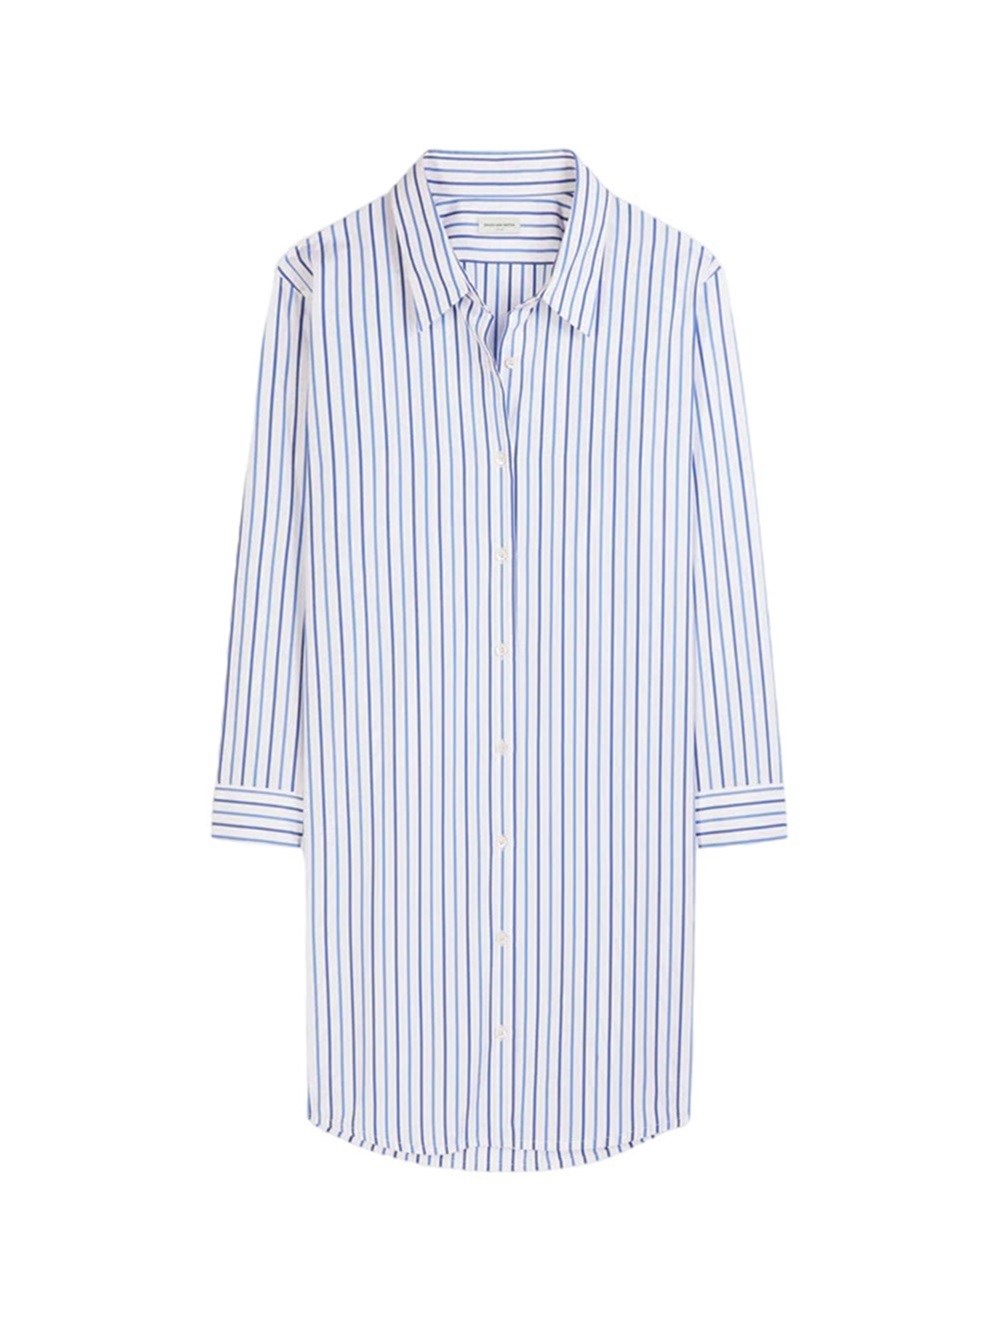 Shop Dries Van Noten Cotton Shirt Dress  Composition  100% Cotton. Striped Pattern. Lose Weight. Knee Length. Buttoned Cu In Blue